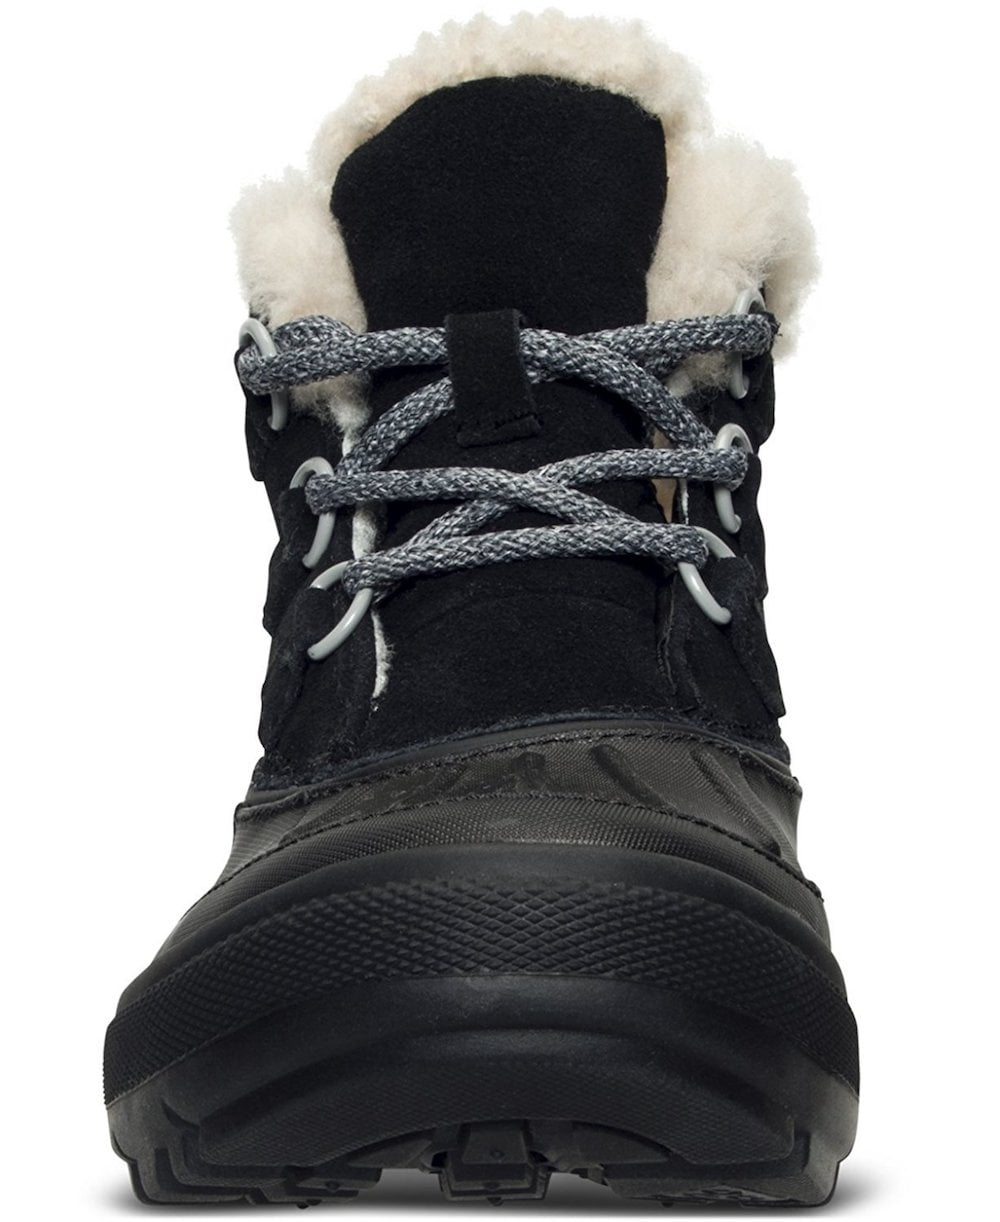 Nike Women's Woodside II Chukka Boots (8) - Walmart.com